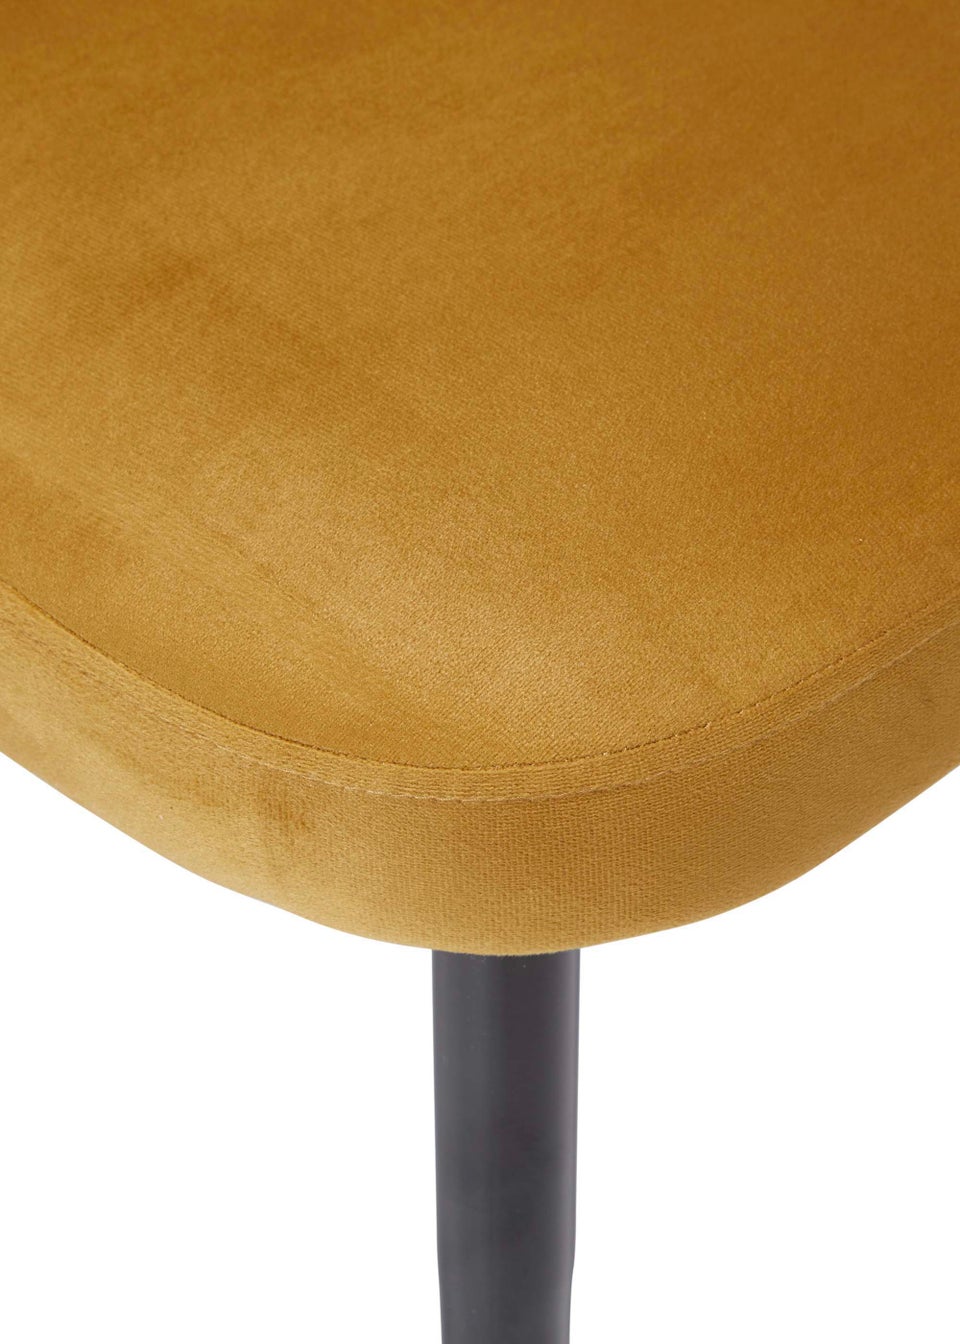 LPD Furniture Set of 2 Zara Dining Chair Mustard  (810x615x520mm)